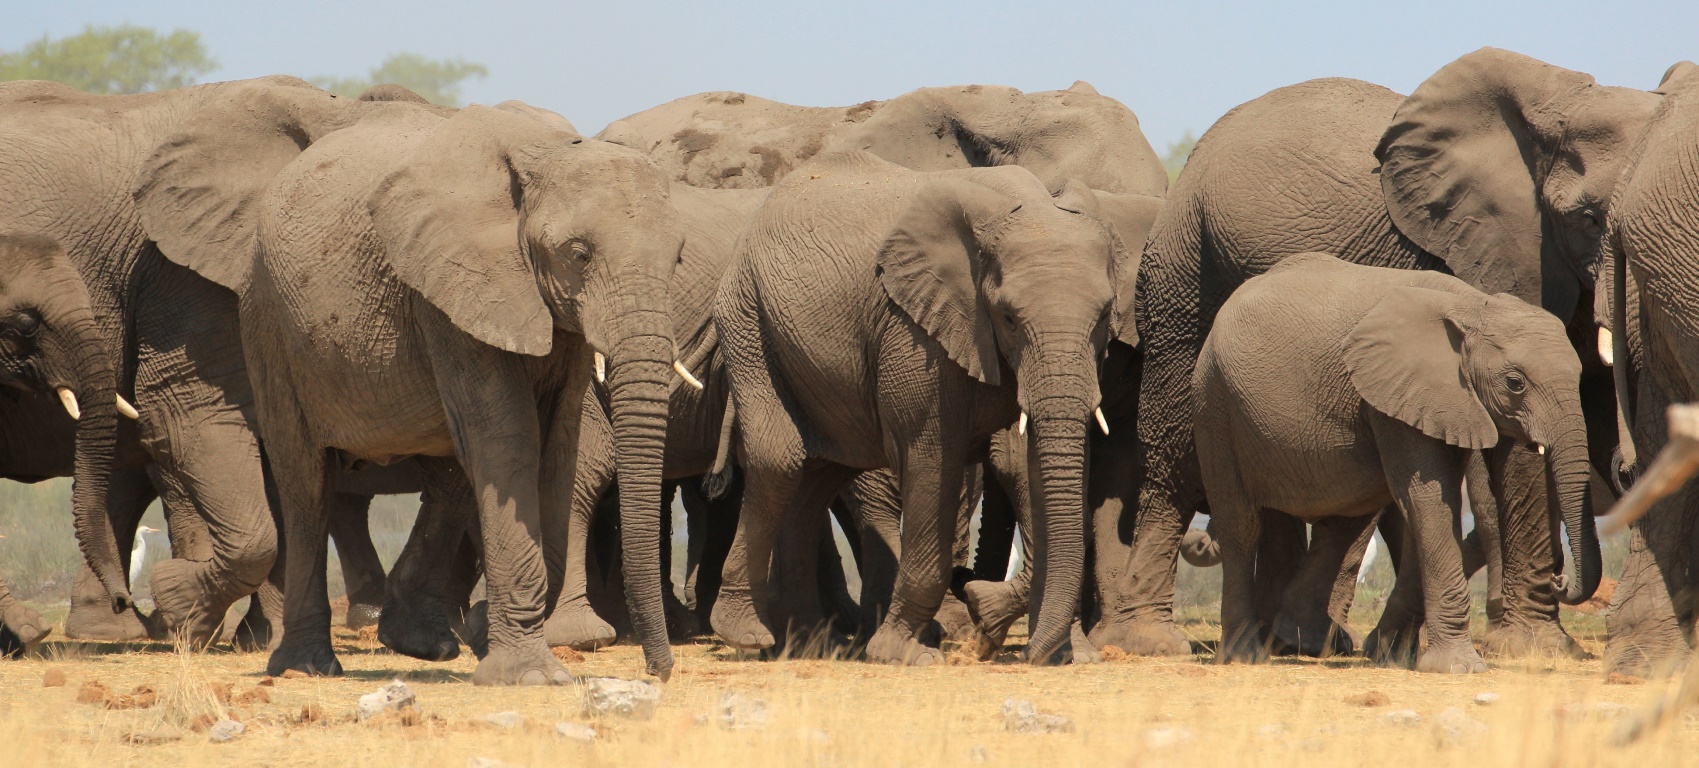 Herd of elephants milling around